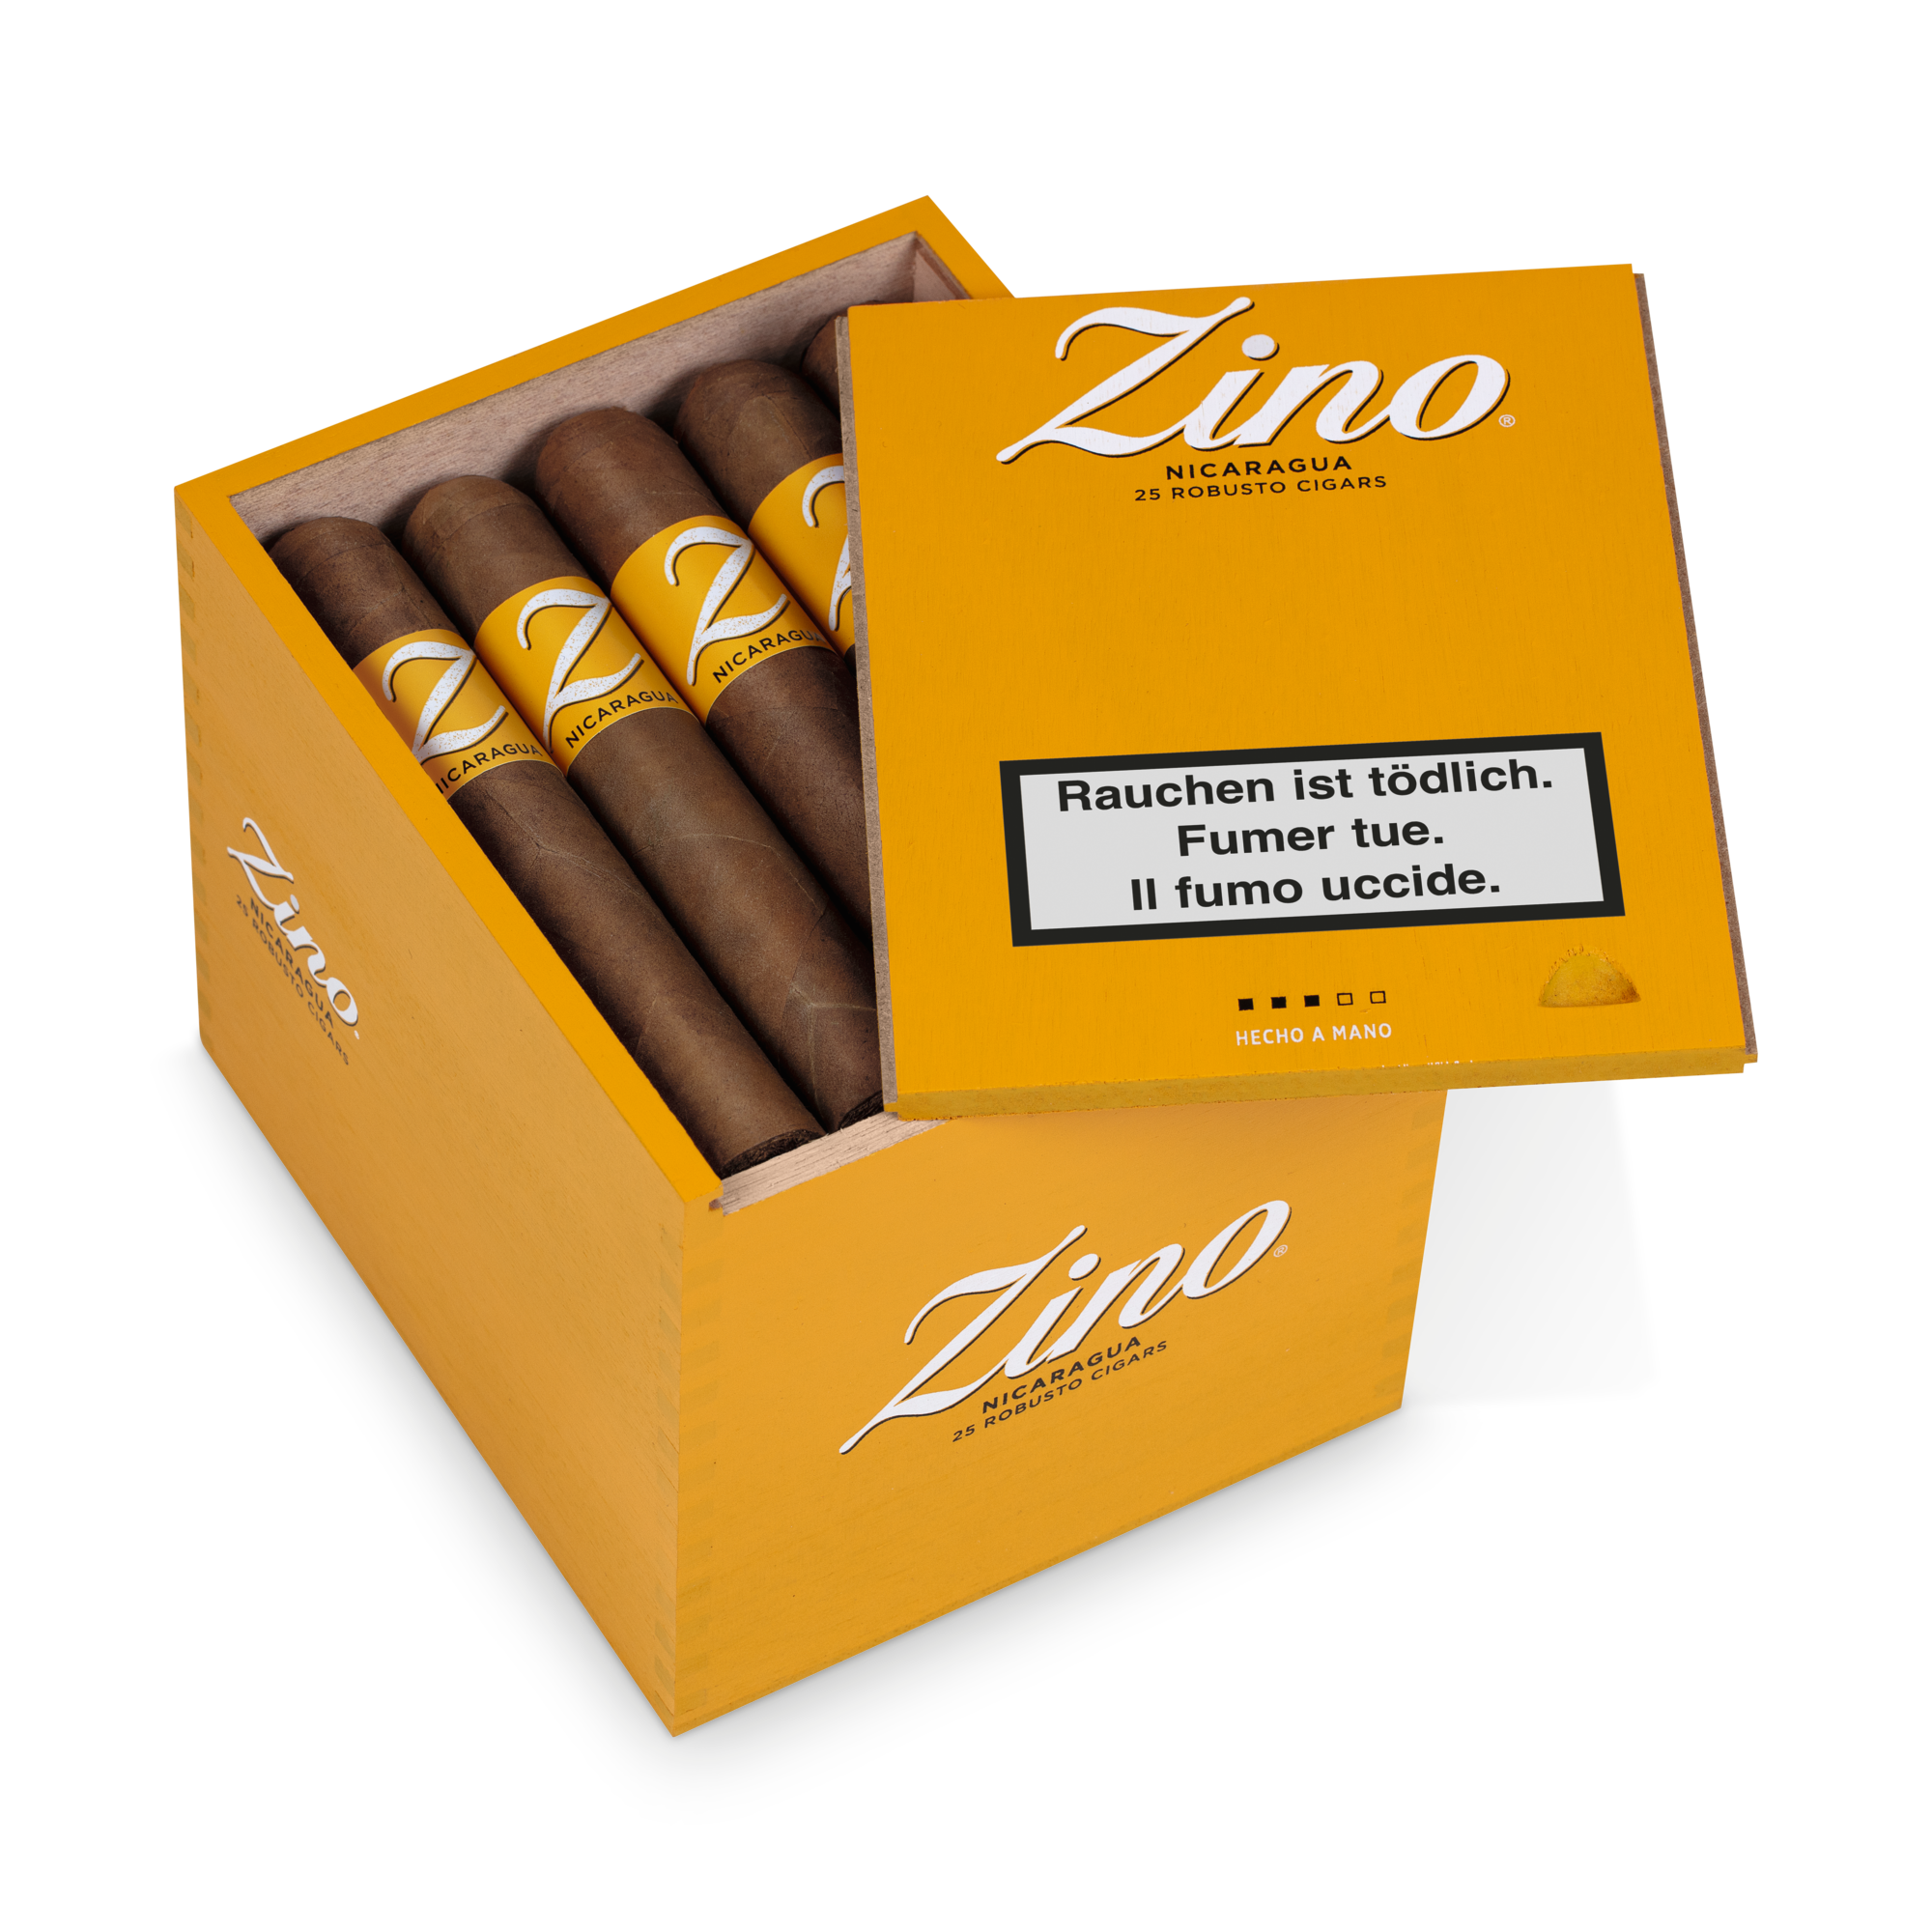 Zino Nicaragua Robusto Zigarre 25er Box geöffnet